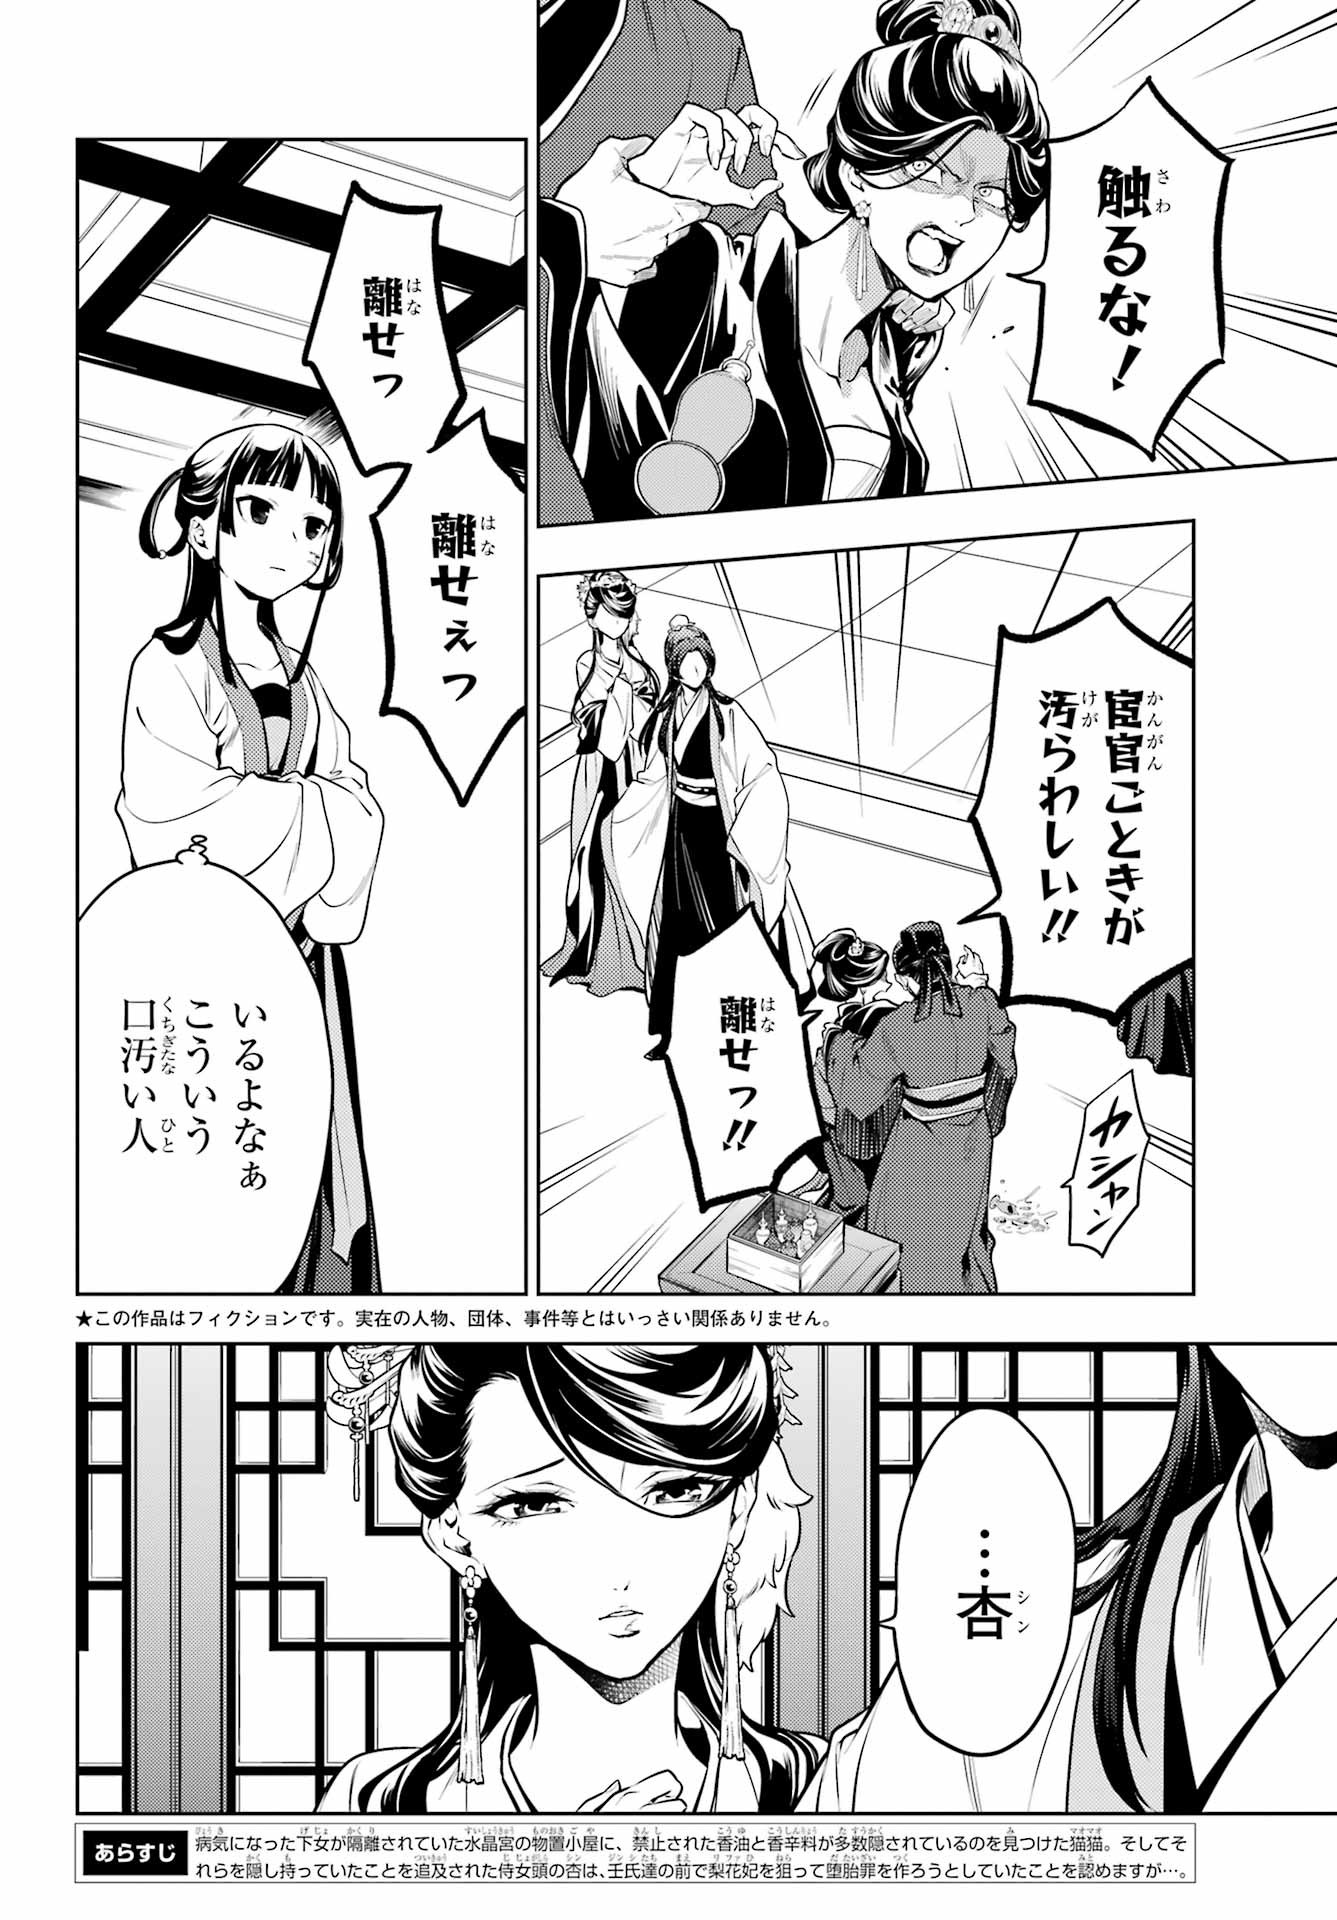 Kusuriya no Hitorigoto - Chapter 52-2 - Page 3